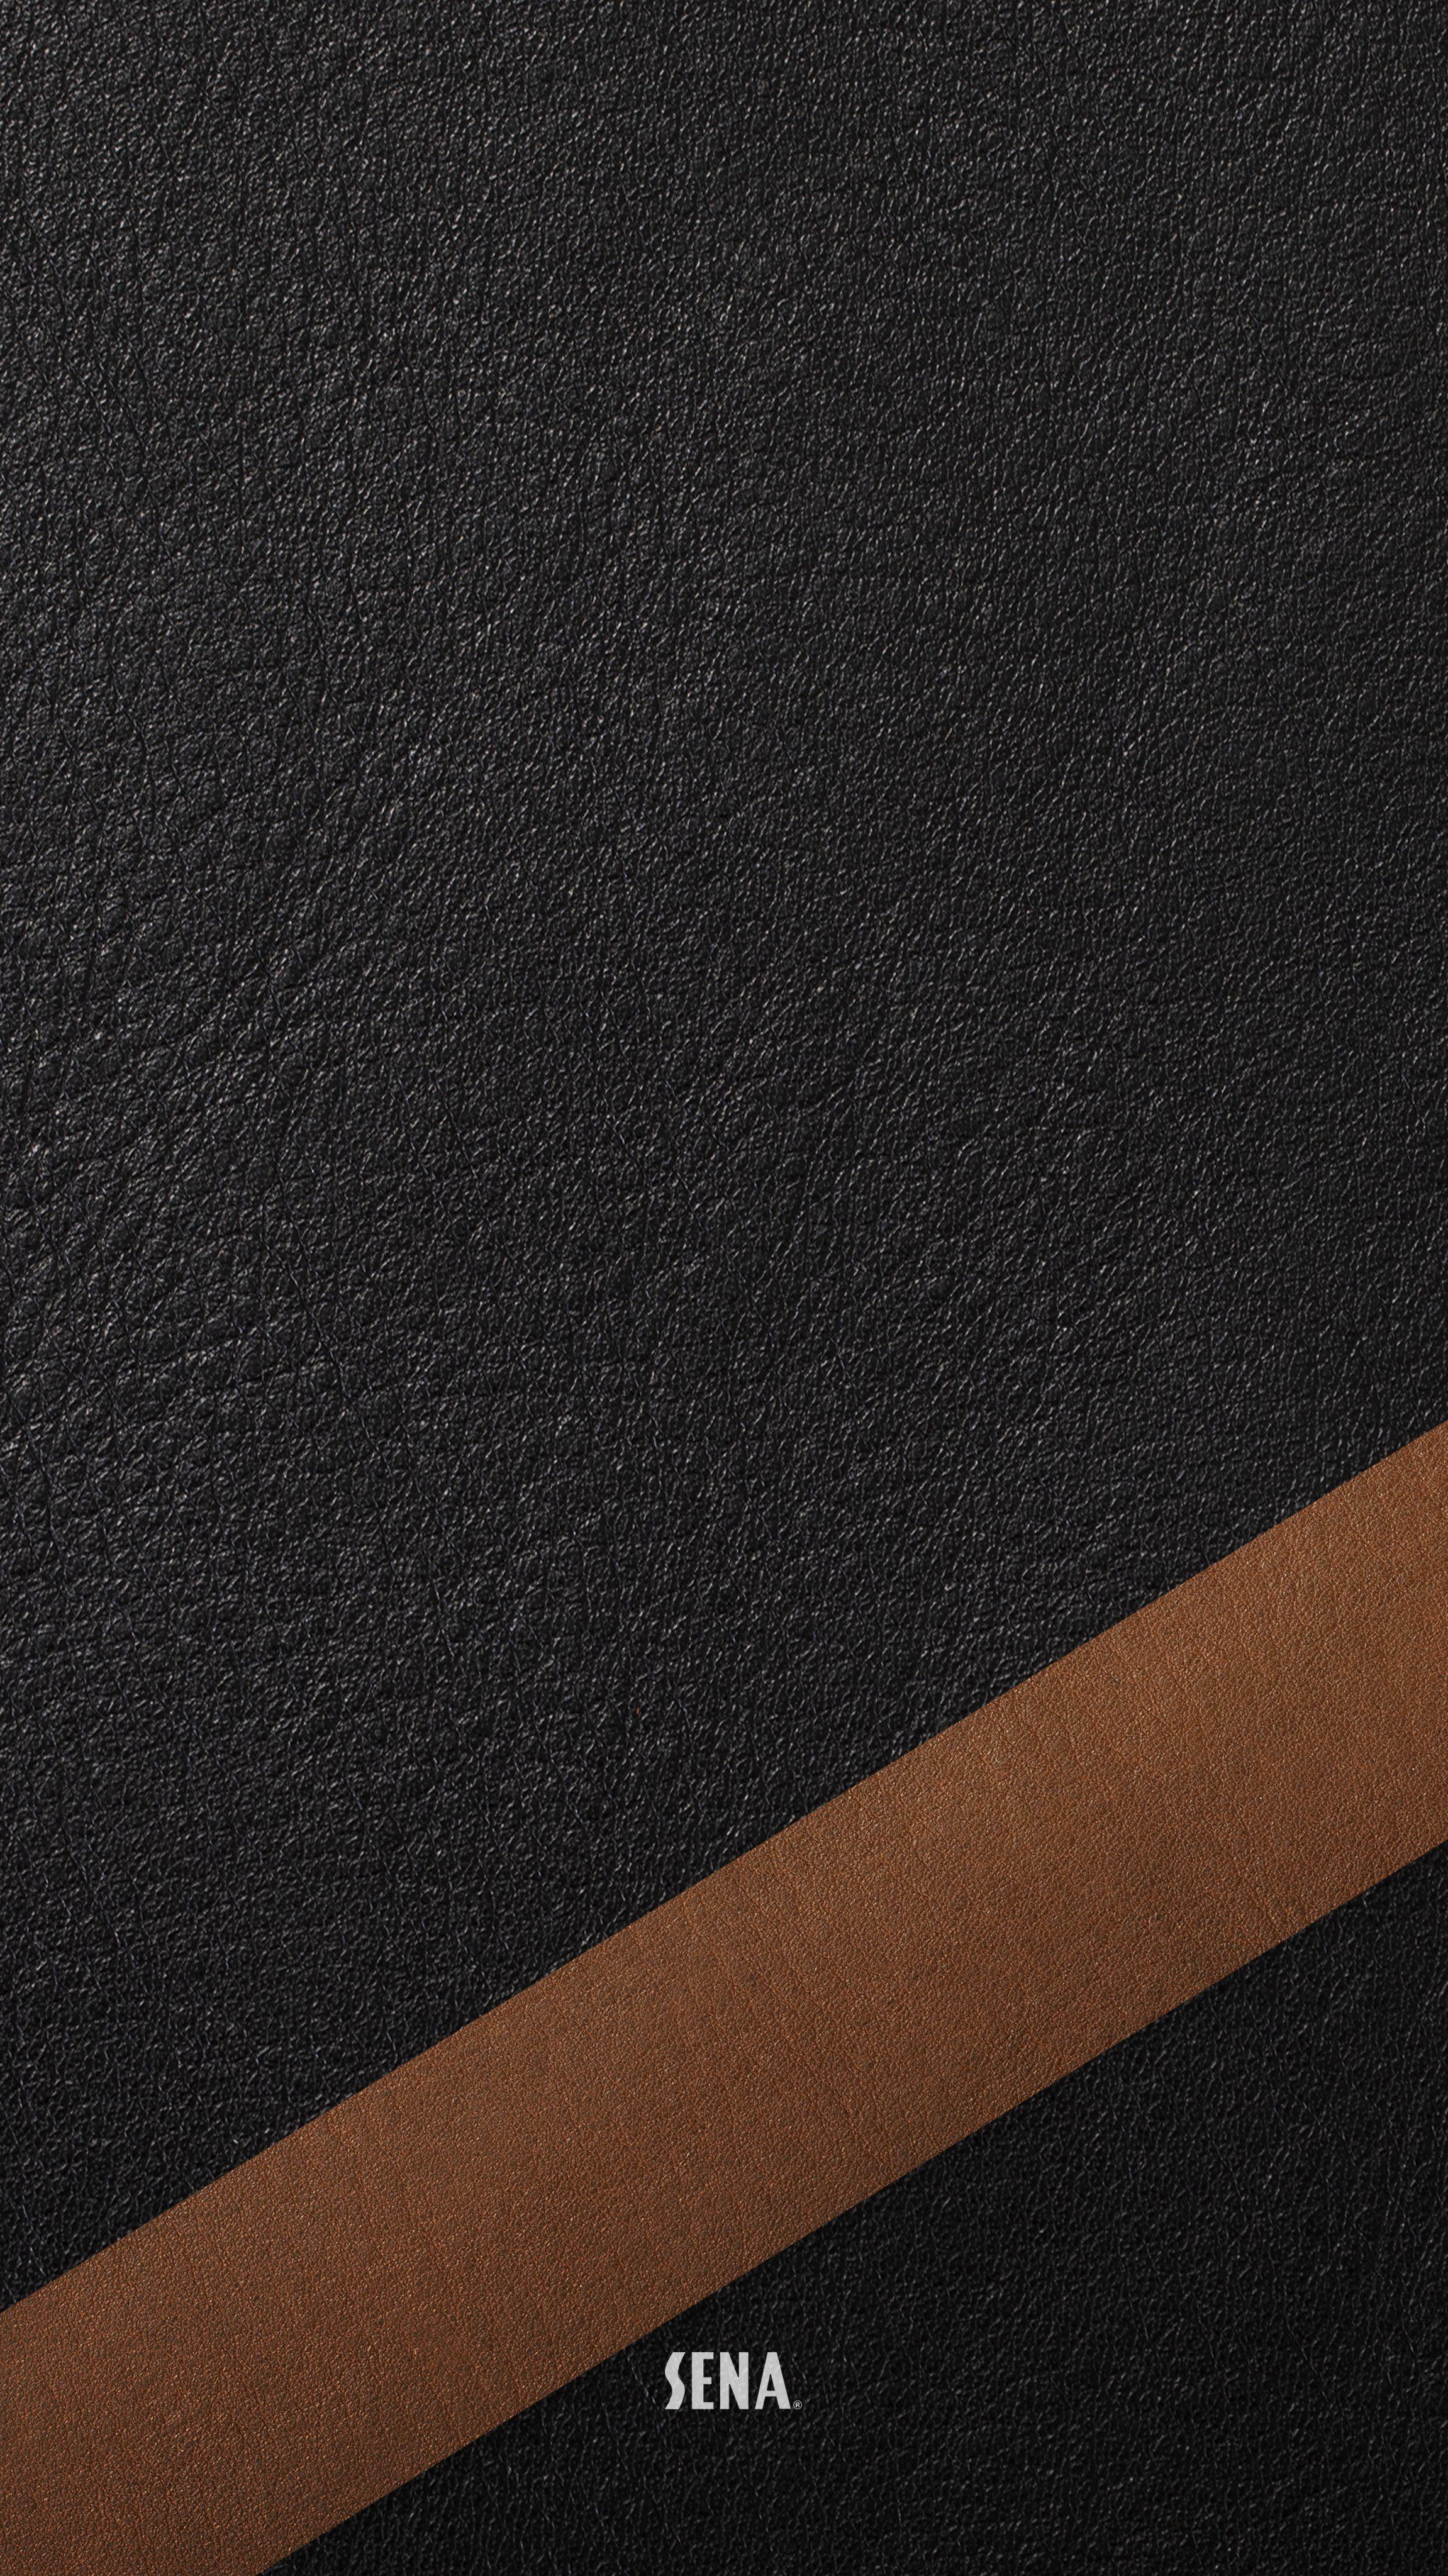 Black Leather 3 - iPhone Wallpaper | Black wallpaper, Flower phone wallpaper,  Dark wallpaper